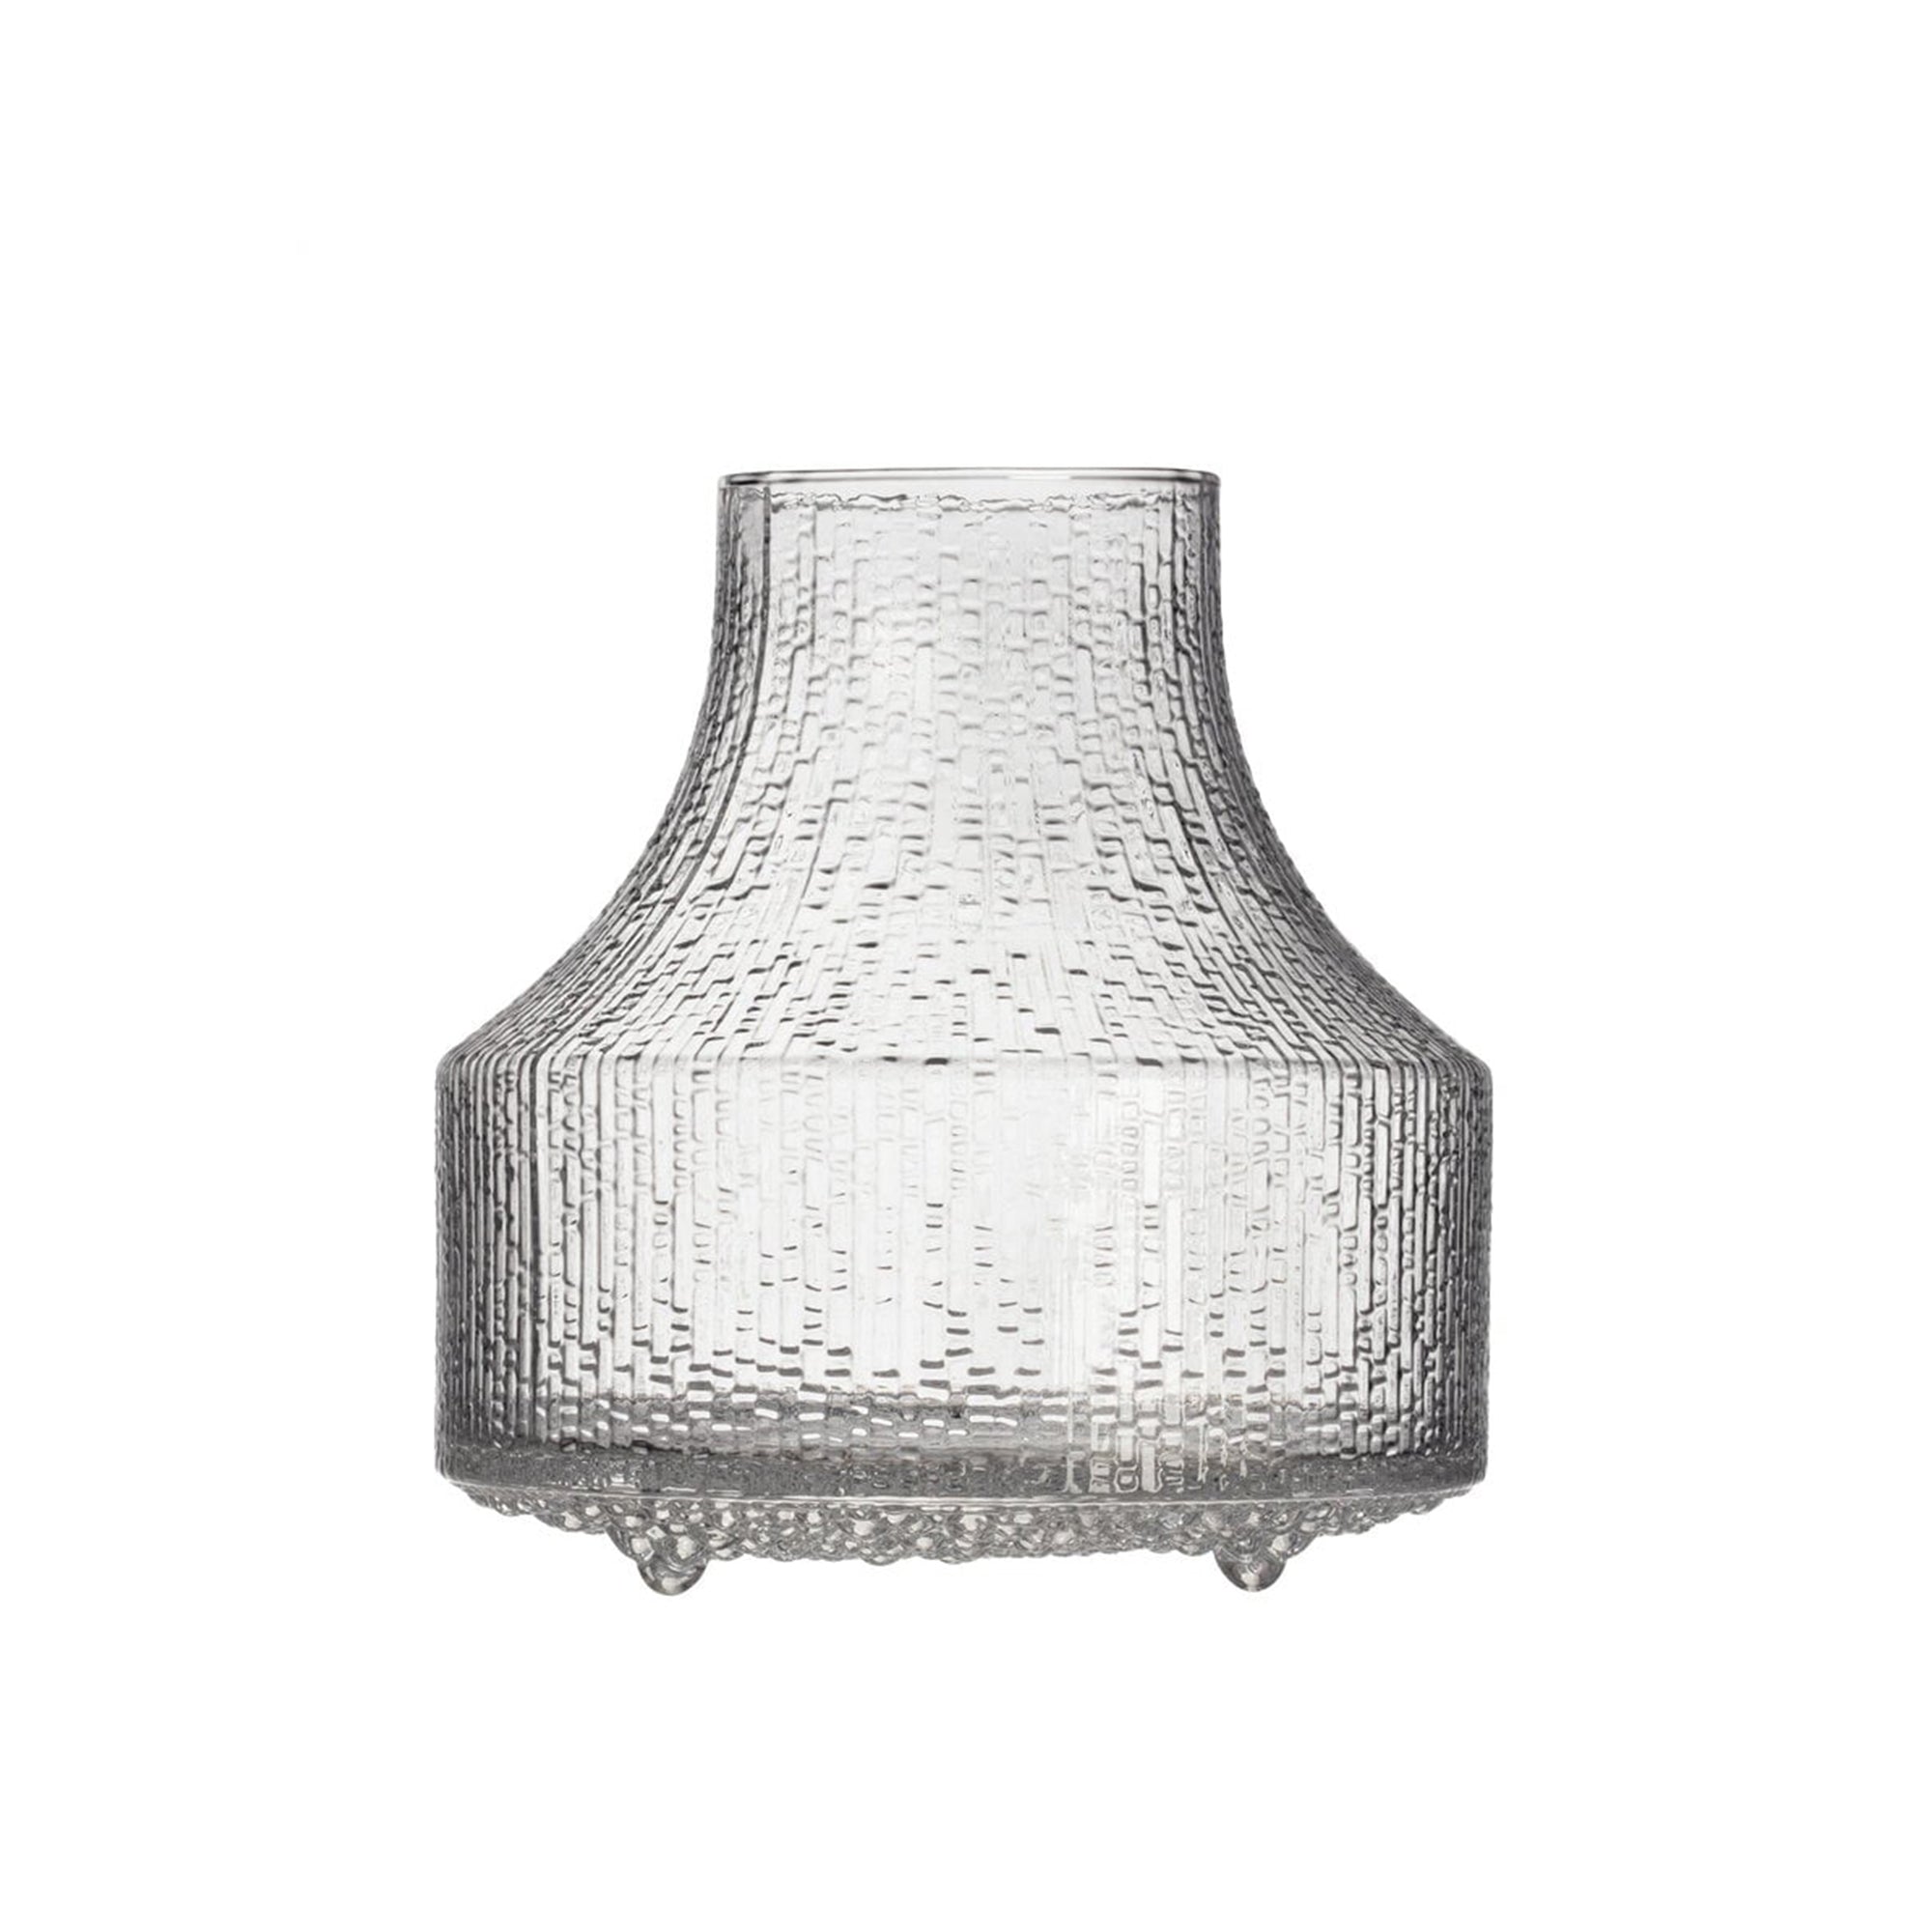 Ultima Thule Glass Vase